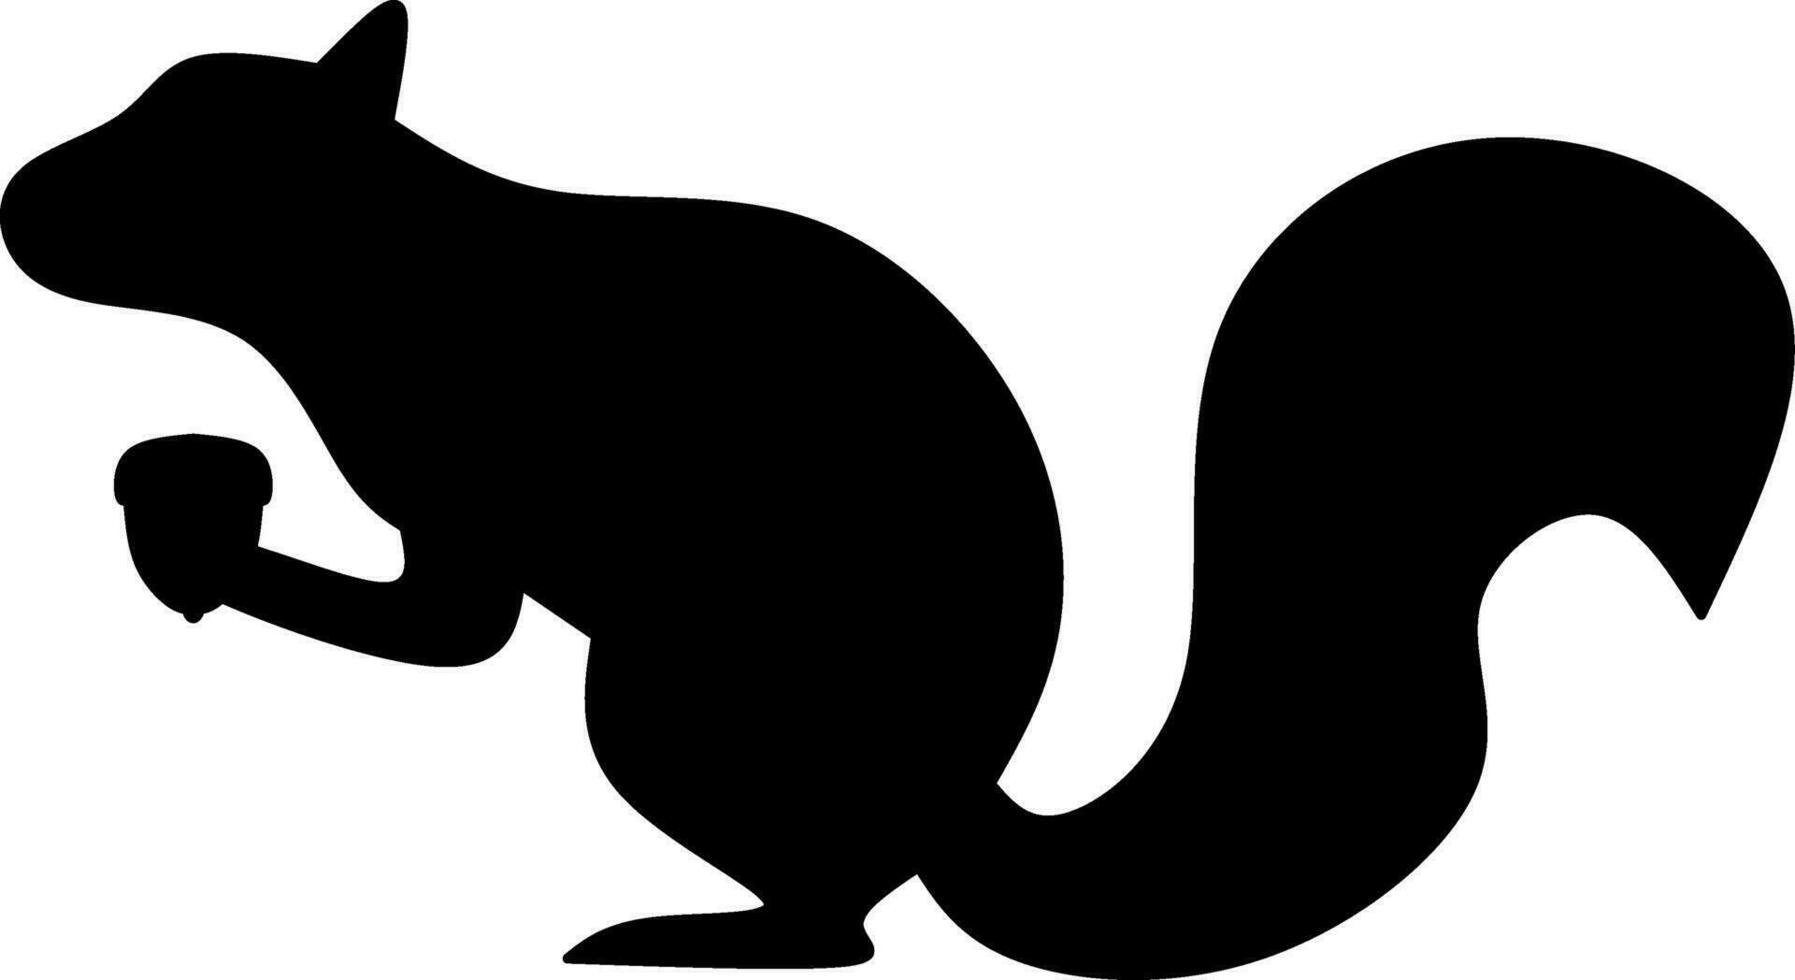 Squirrel eats acorn silhouette icon vector illustration. Simple squirrel icon for fall season design. Autumn graphic resource for icon, sign, symbol or decoration. Silhouette of squirrel and acorn